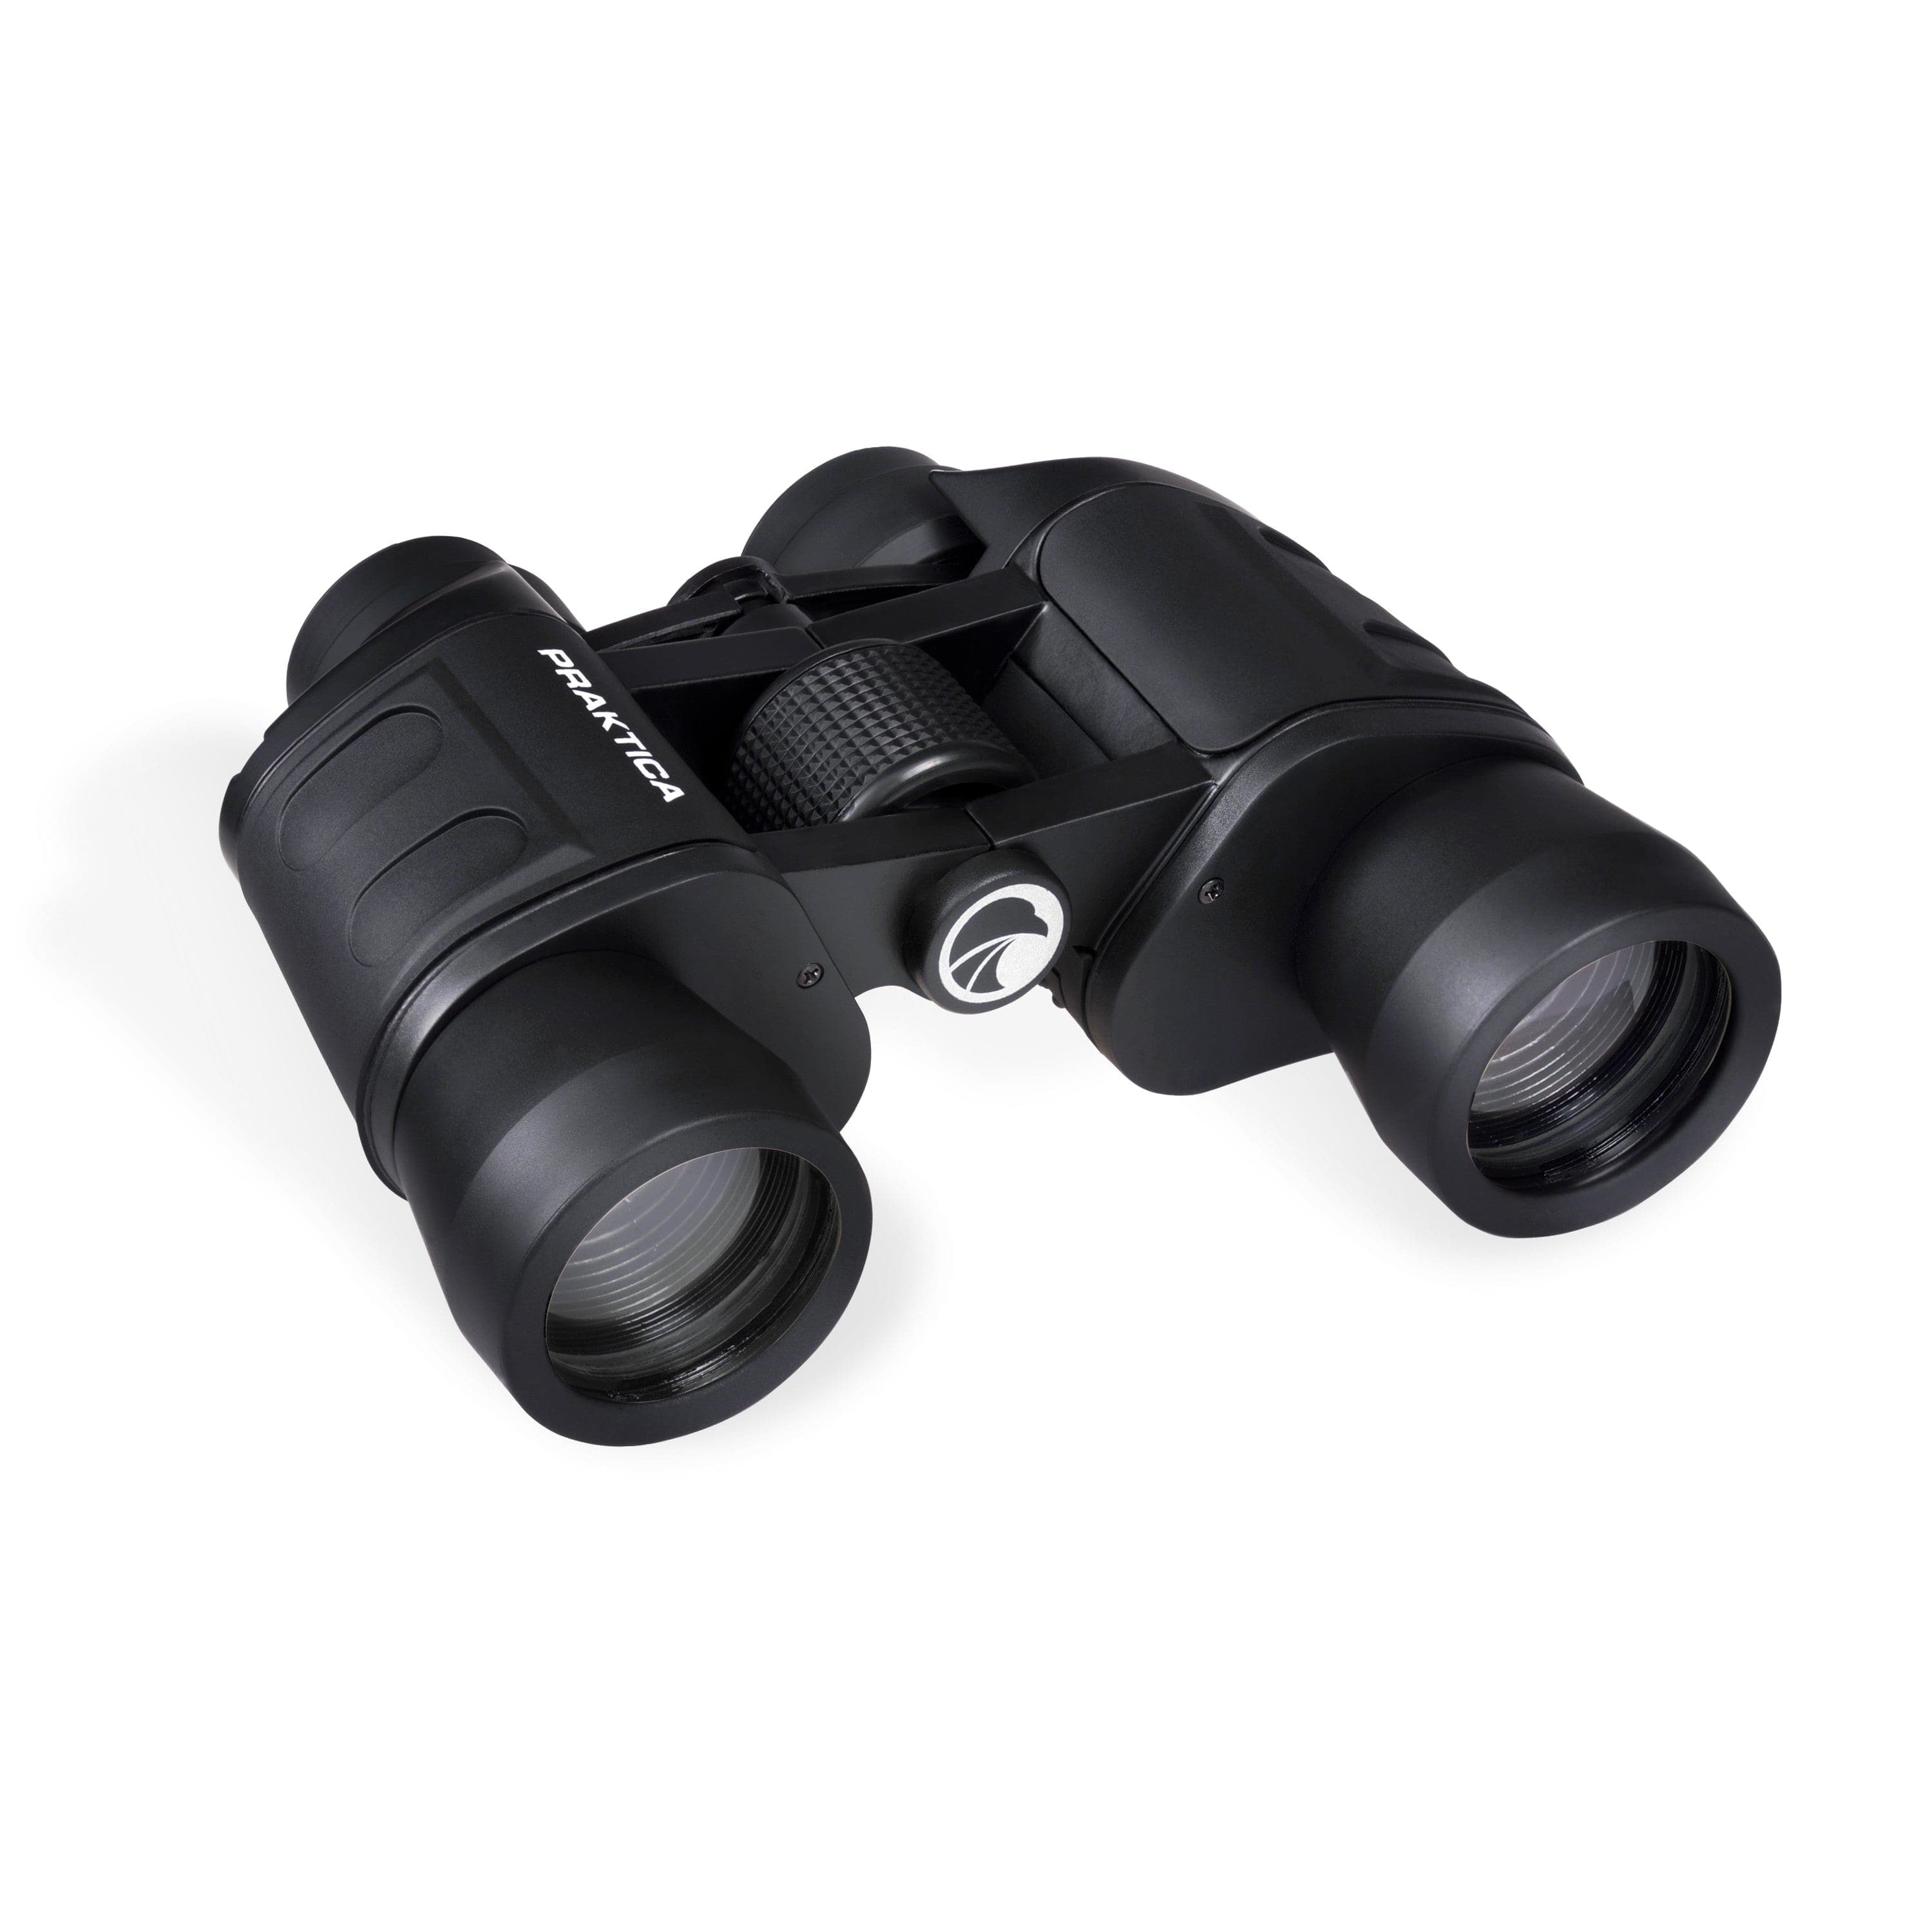 PRAKTICA Falcon 8x40mm Wide Angle Porro Prism Field Binoculars - Black (Binoculars Only)